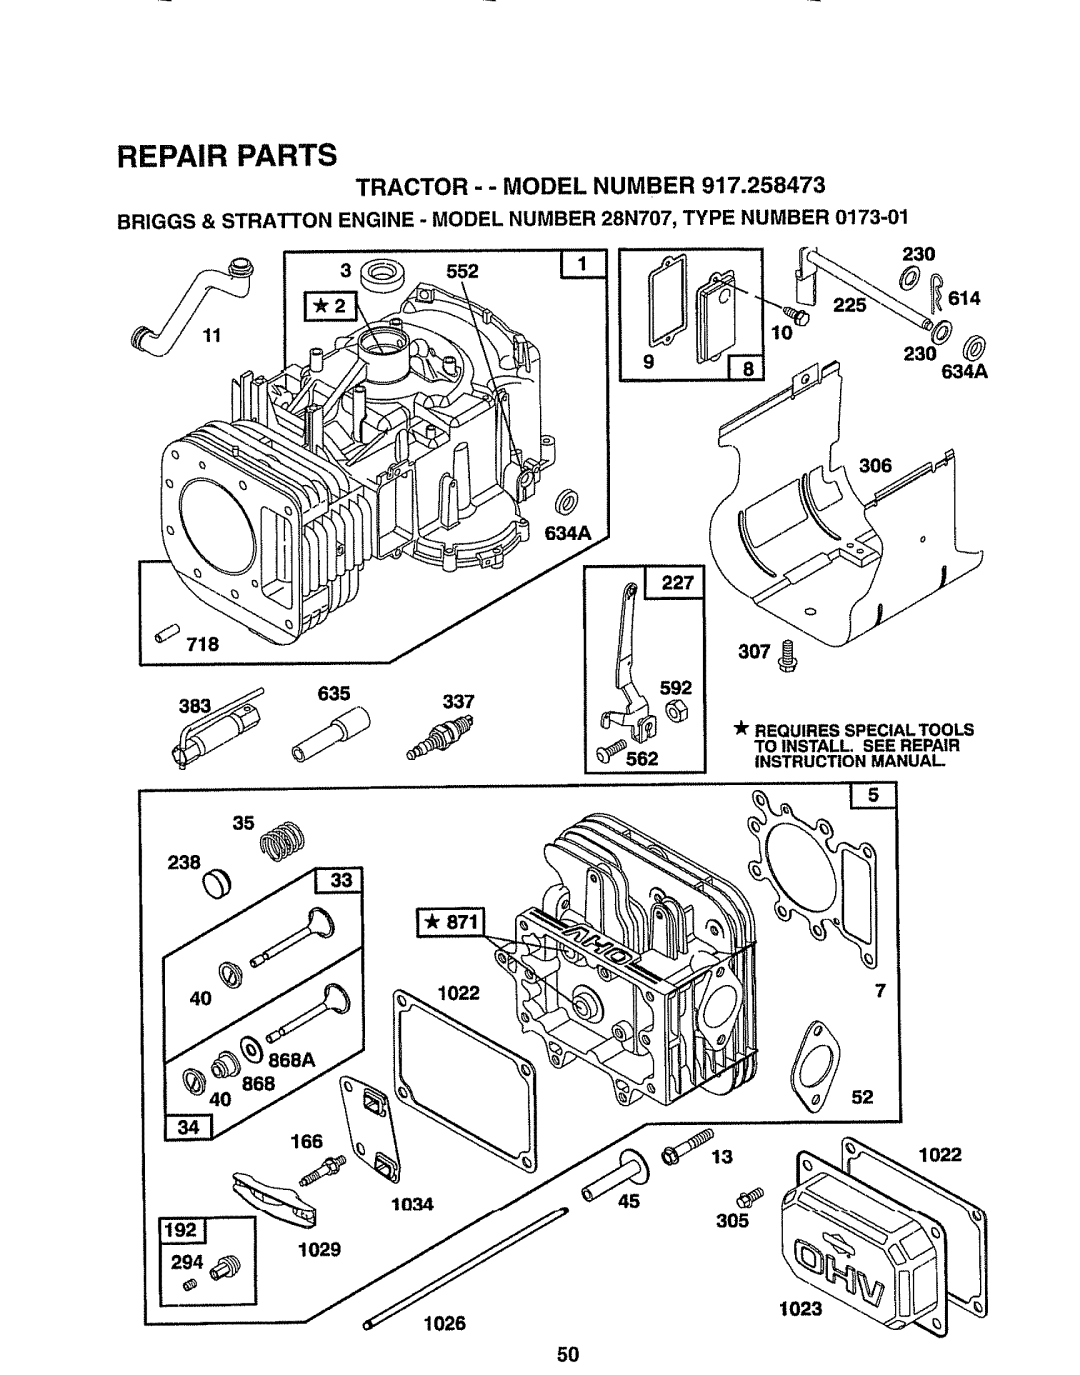 Sears 917.258473 owner manual 868 40, 634A, Repair Parts, Tractor - - Model Number 